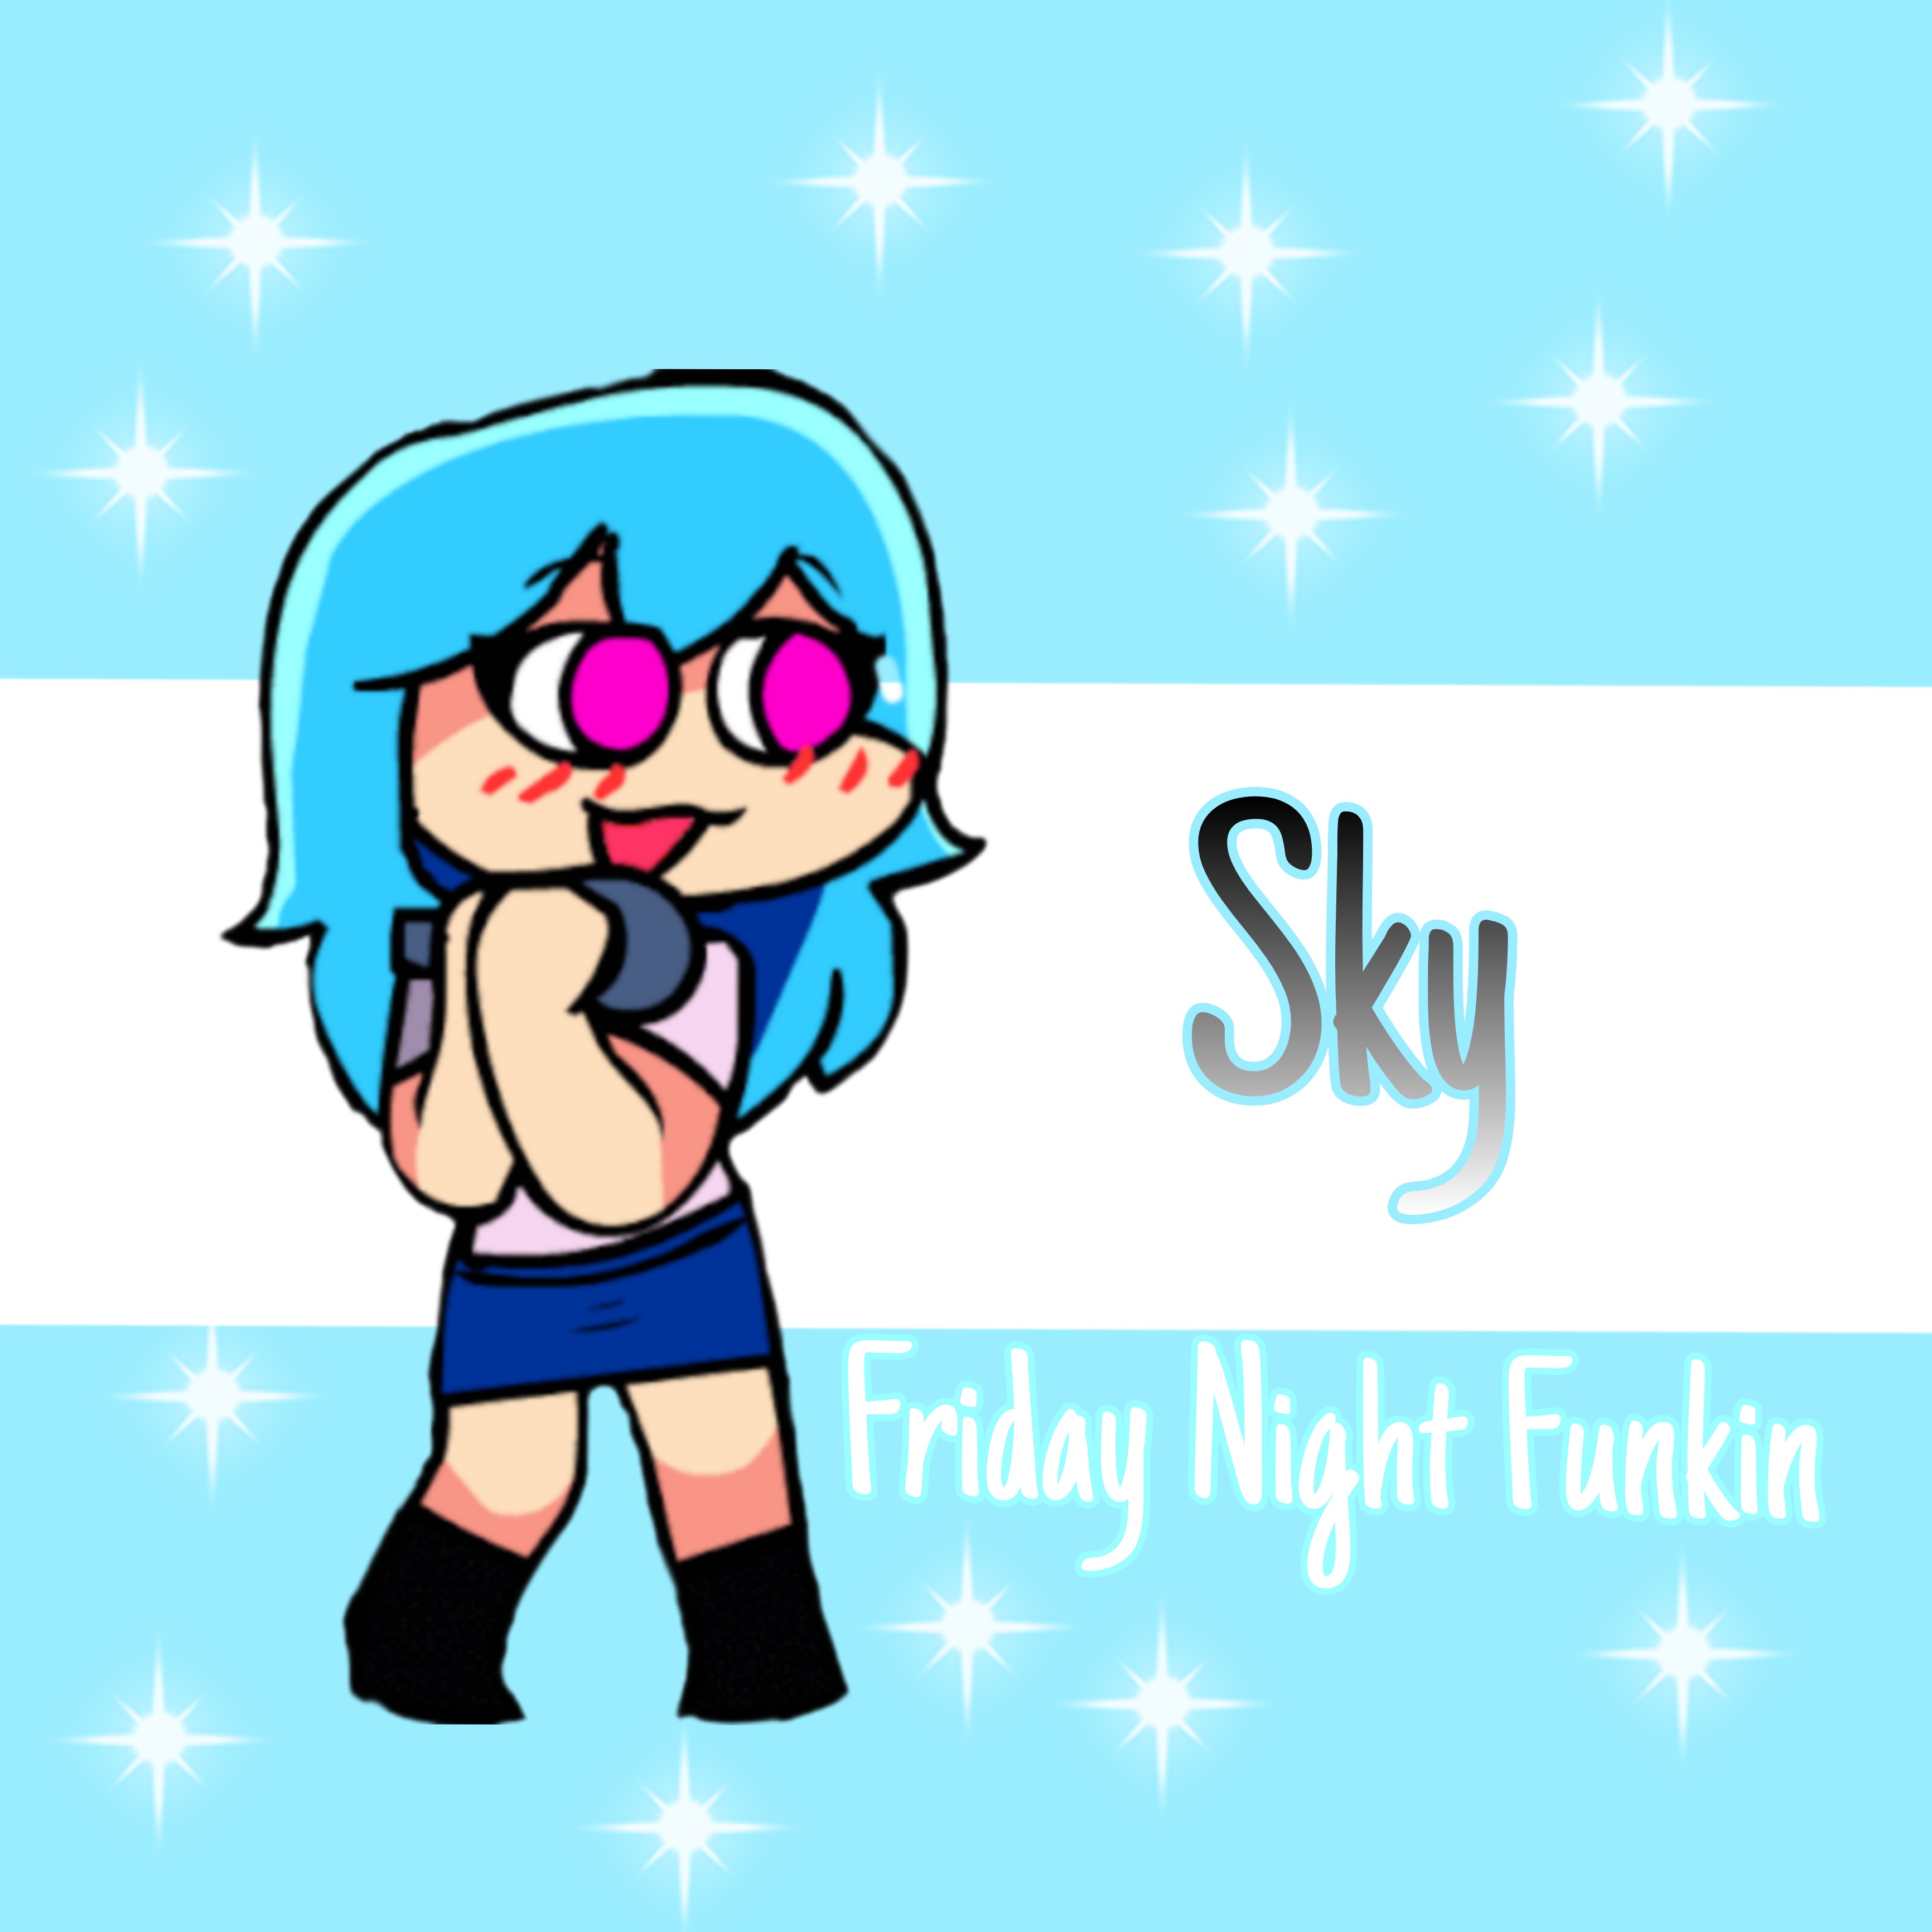 Night sky friday funkin FNF Vs.